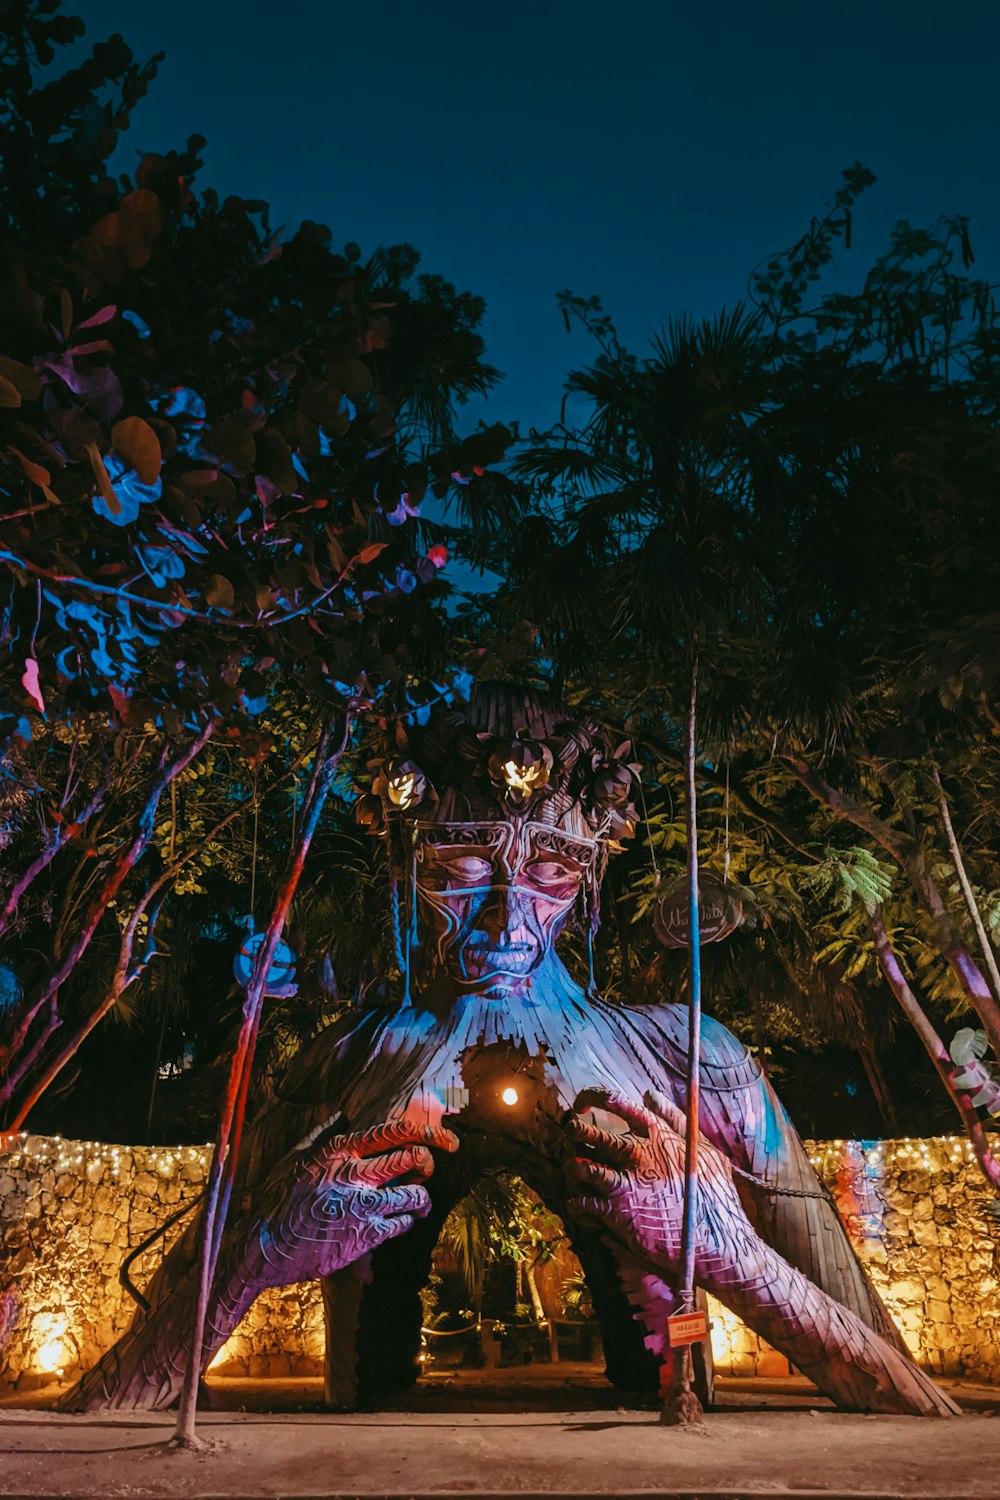 hindu deity statue near trees during night time